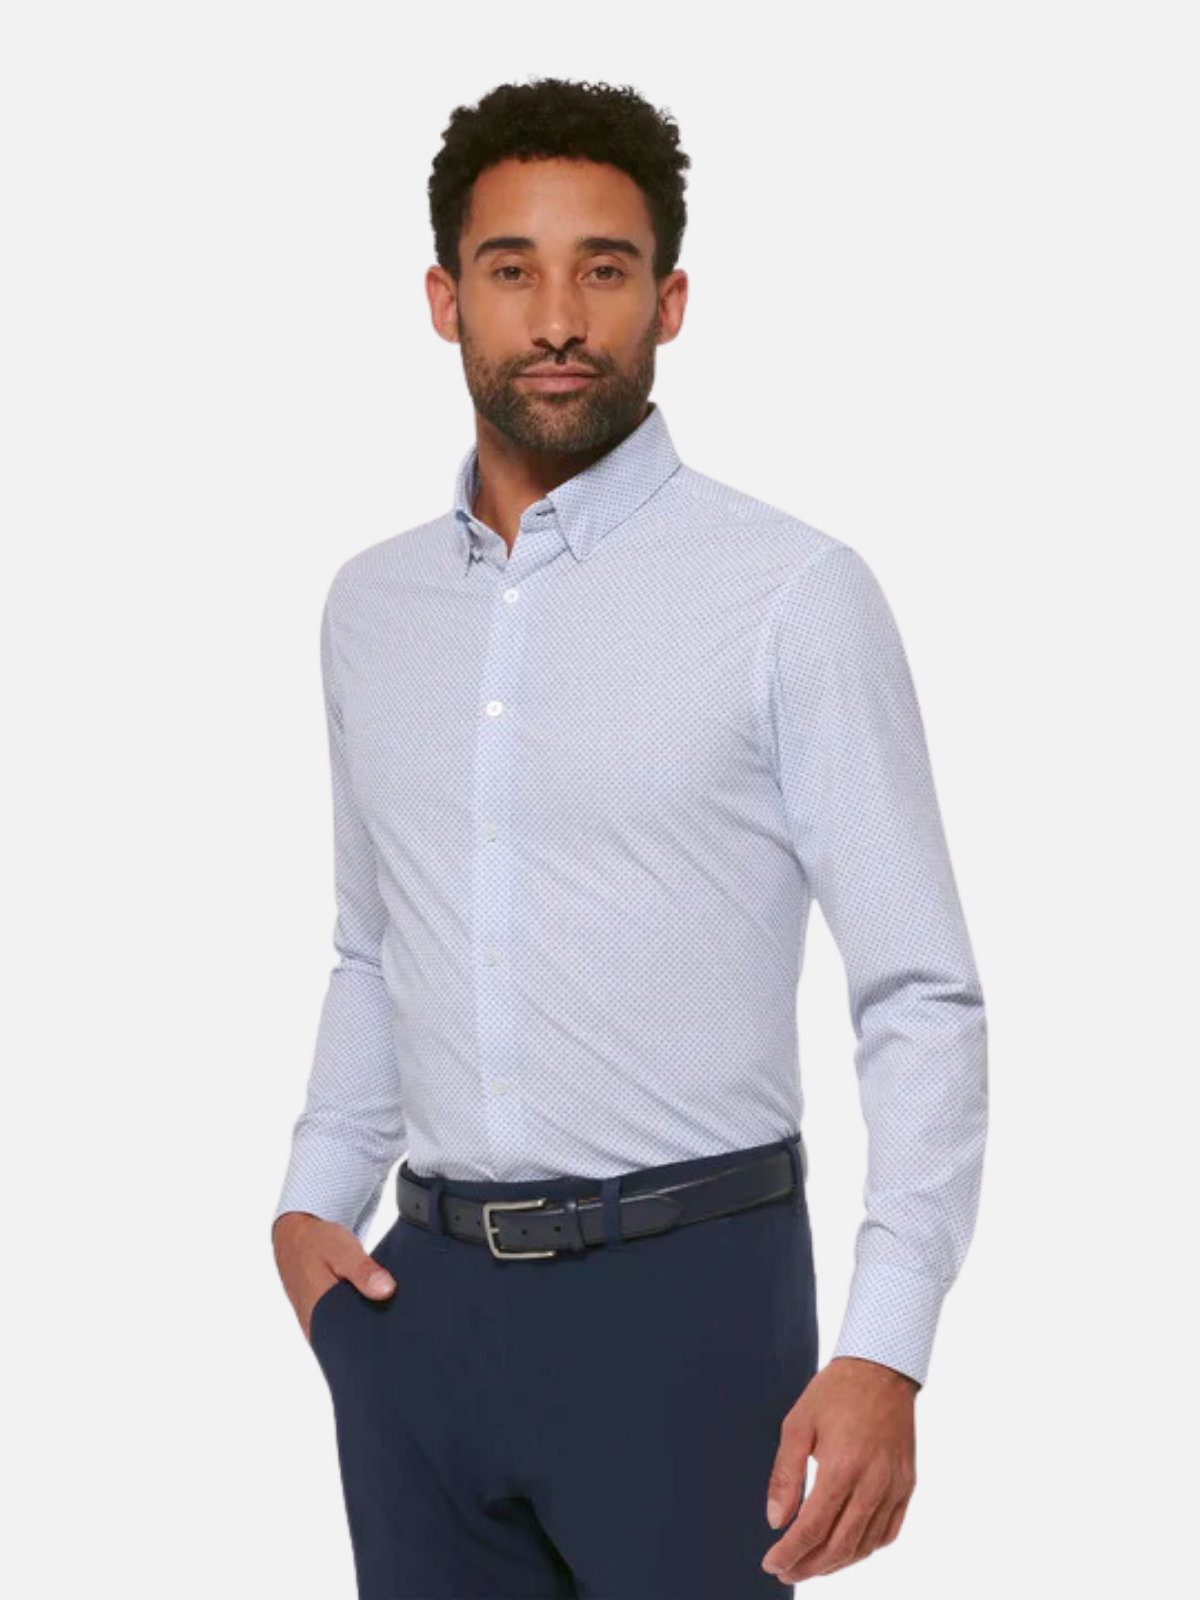 mizzen and main leeward ls long sleeve dress shirt performance material white plus print blue wrinkle resistant kempt athens ga georgia men's clothing store